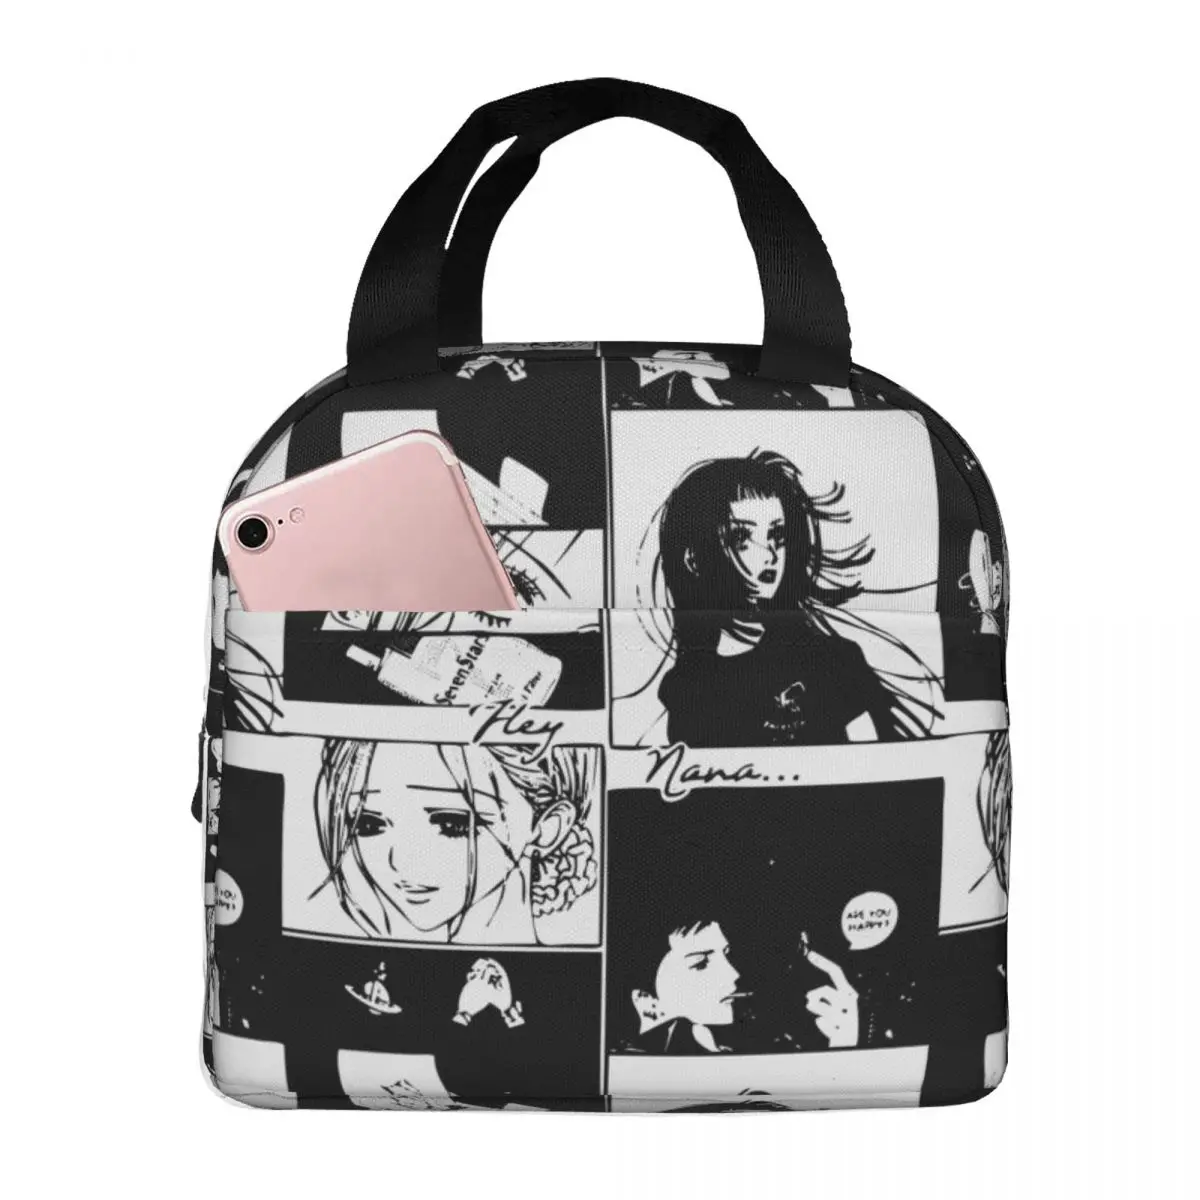 Lunch Bag for Men Women Hey Nana Osaki Insulated Cooler Portable Picnic School Anime Canvas Lunch Box Handbags